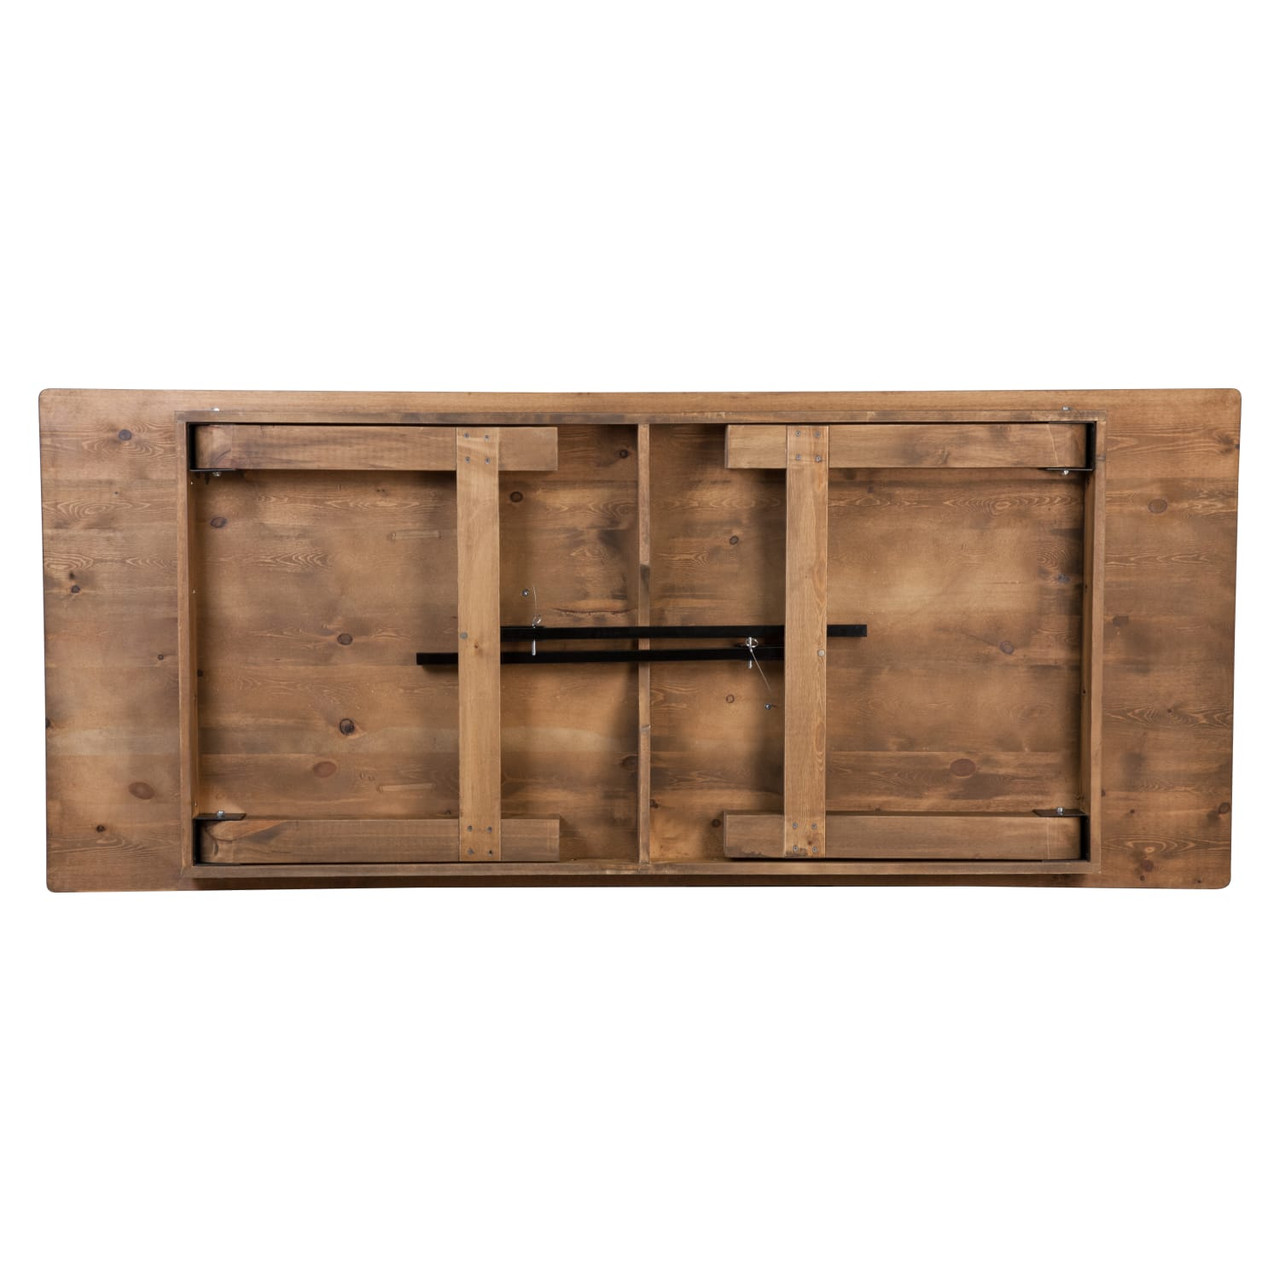 HERCULES Series 8' x 40” Rectangular Antique Rustic Solid Pine Folding Farm Table